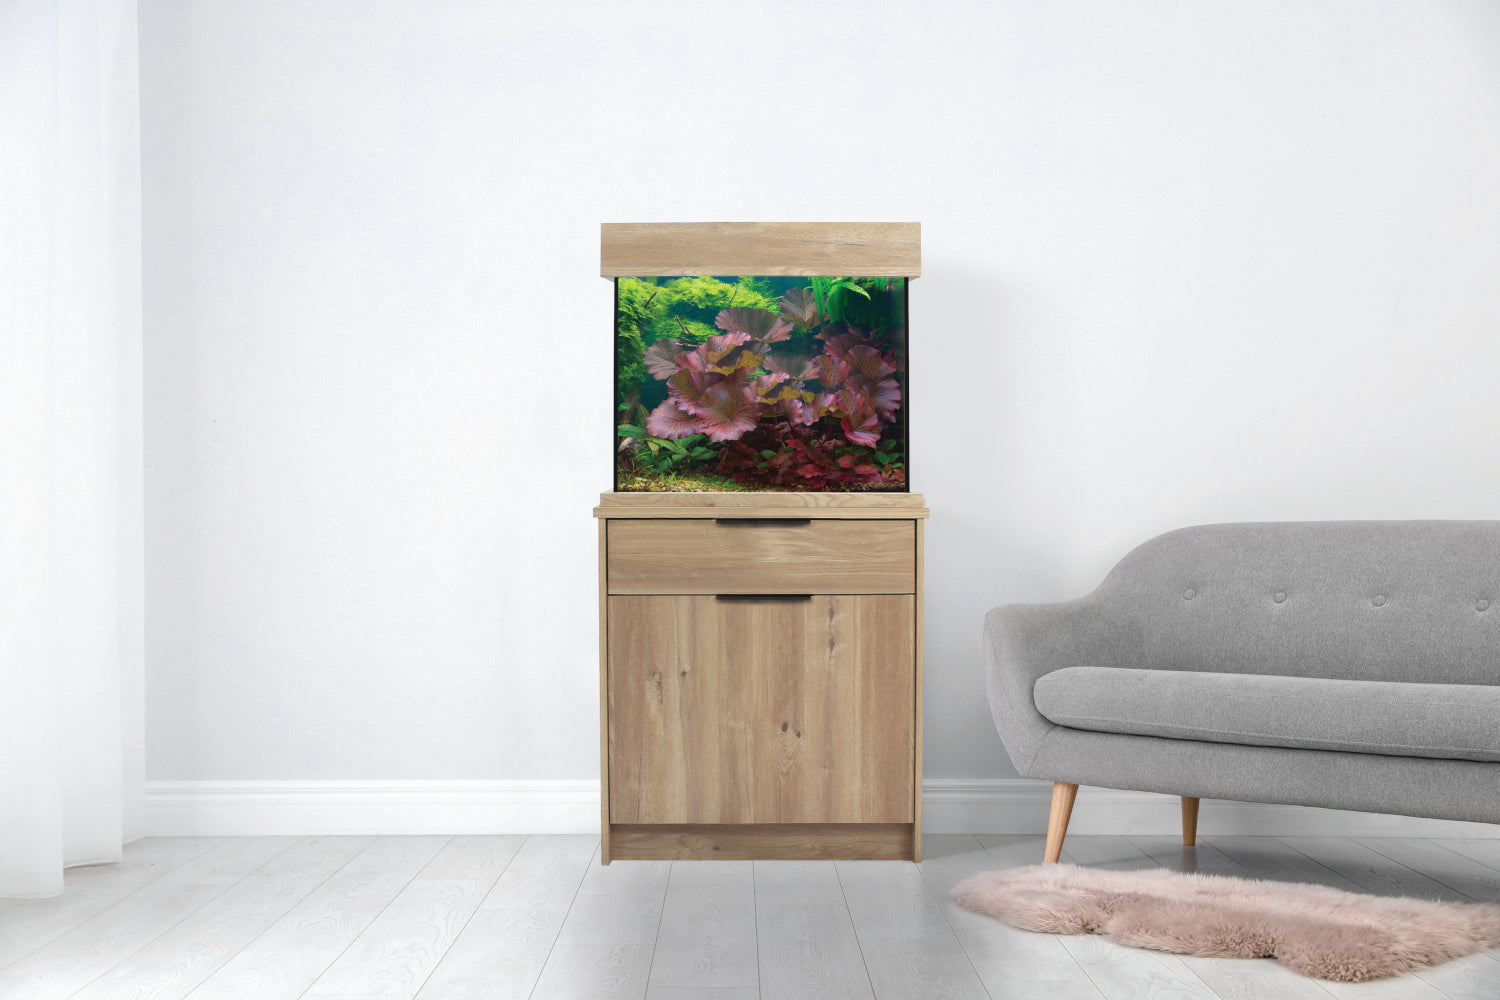 Aqua One Nash Oak Style Aquarium Fish Tank with Cabinet 63cm 110L